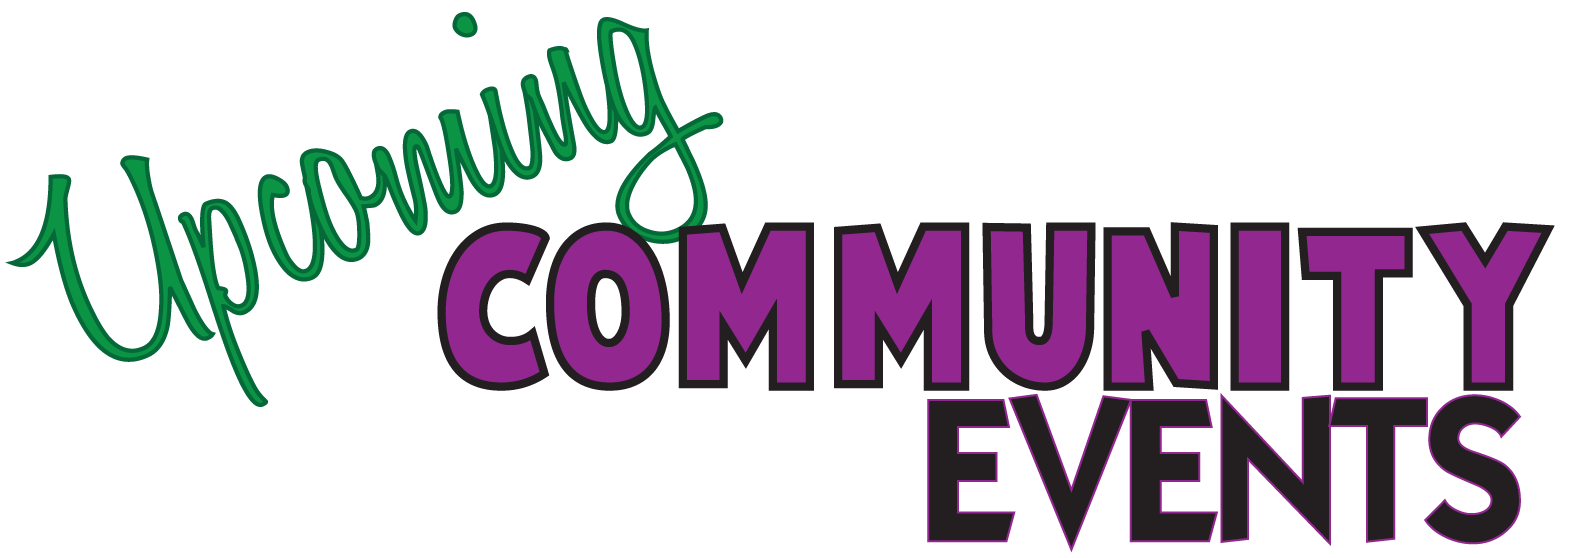 Community clipart kind community. Events clip art n